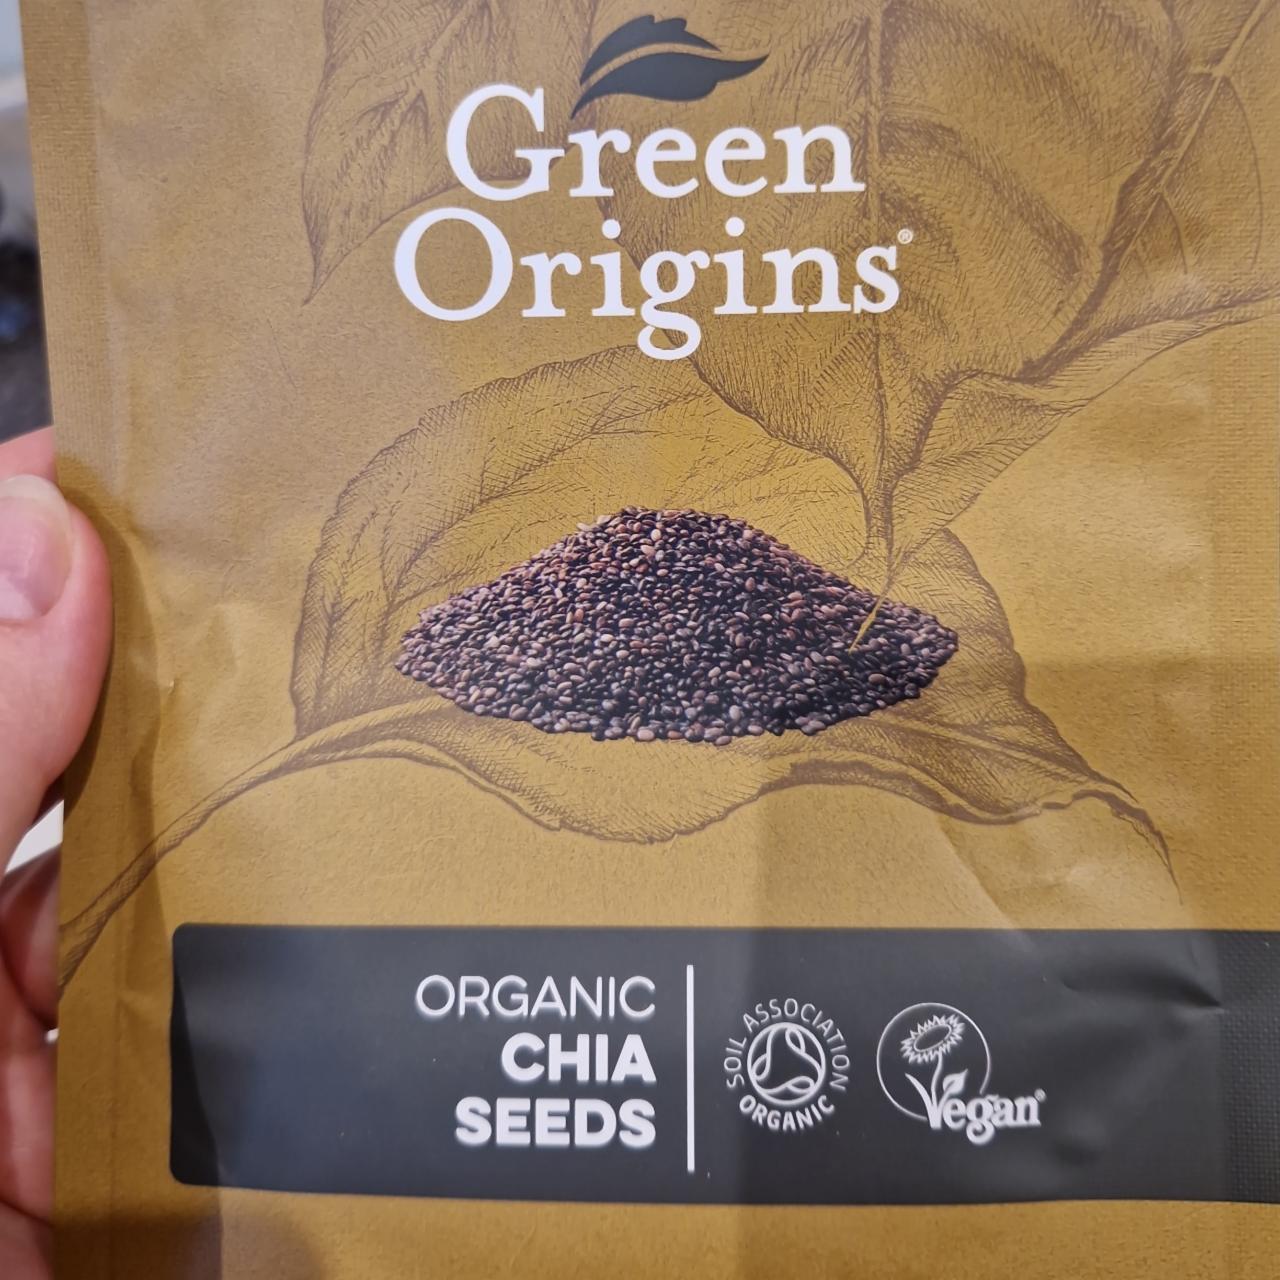 Fotografie - Chia Seeds Organic Green Origins